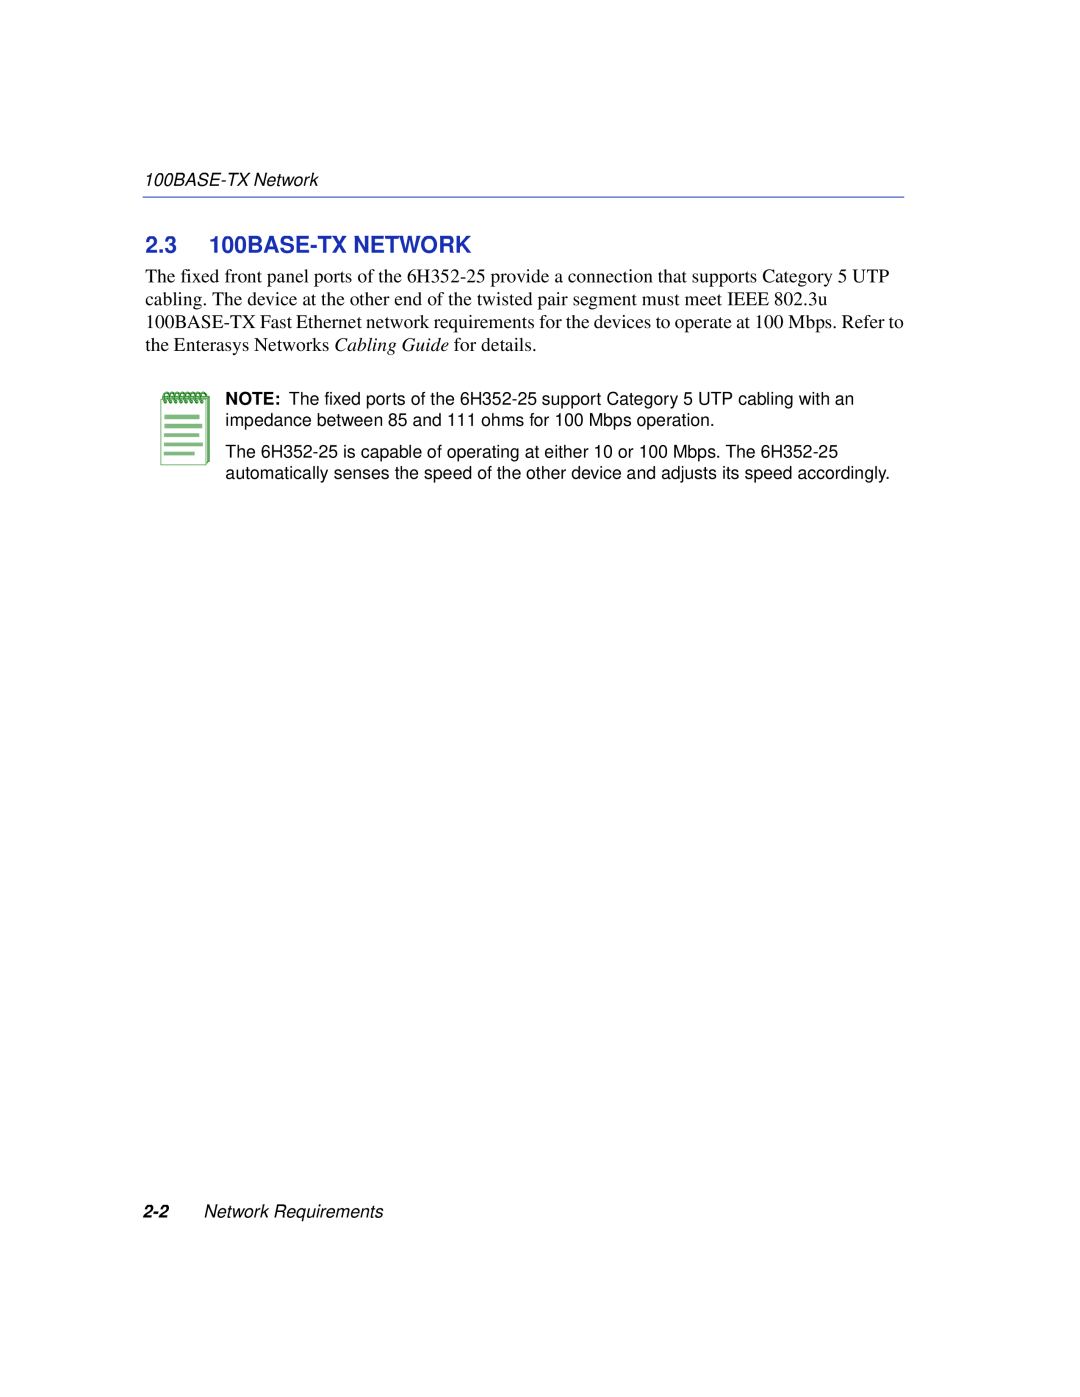 Enterasys Networks 6H352-25 manual 2.3 100BASE-TX NETWORK, 100BASE-TX Network, Network Requirements 